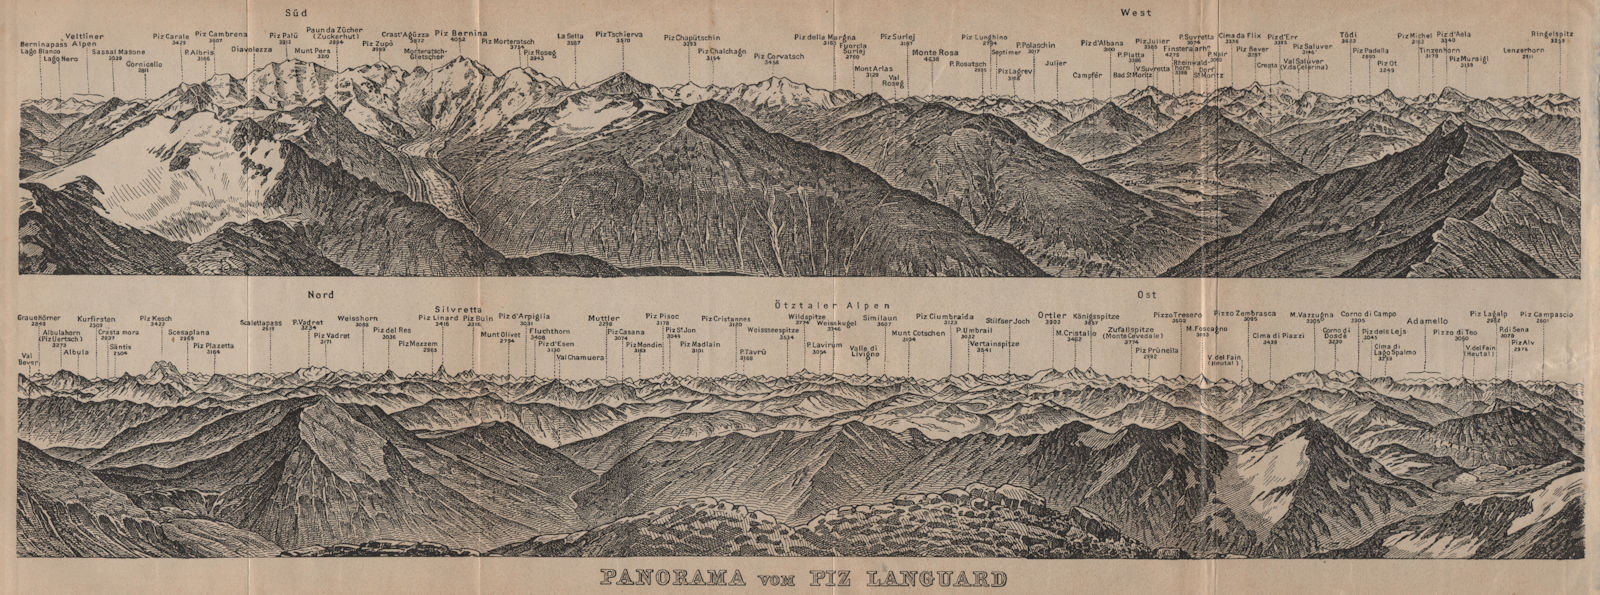 Associate Product PIZ LANGUARD PANORAMA. Bernina Roseg Monte Rosa Mont Blanc Cristallo 1905 map